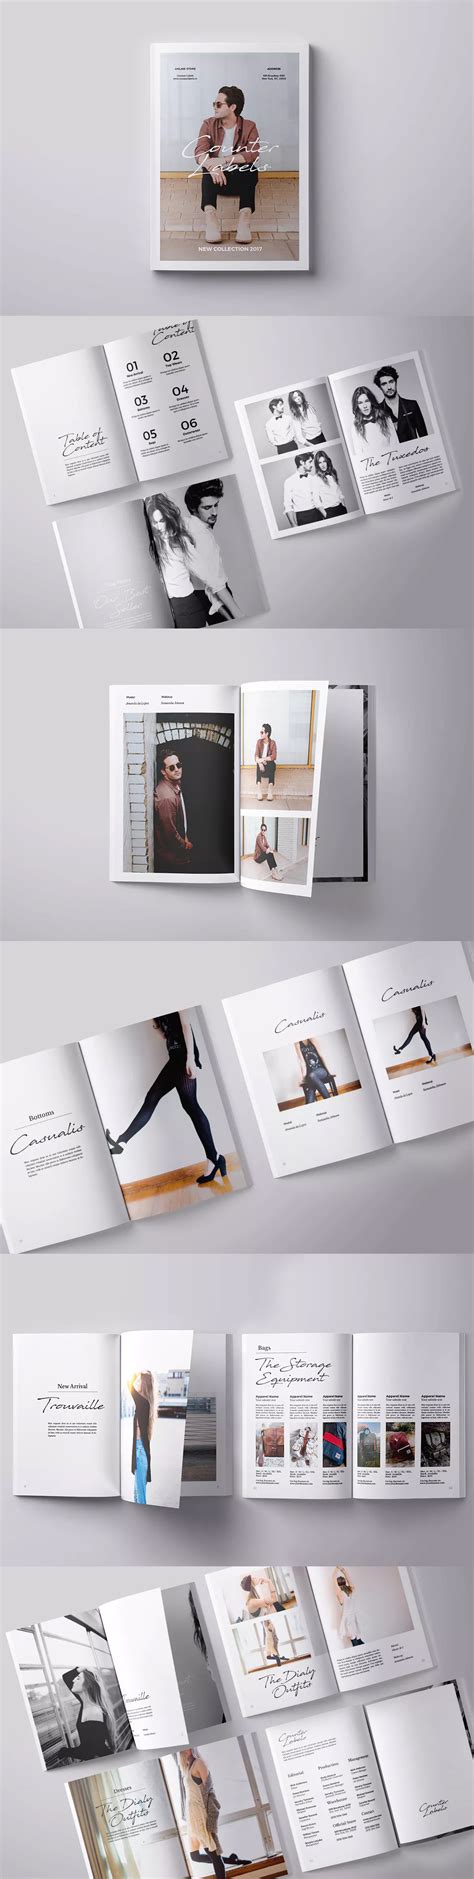 Fashion Lookbook by visuelcolonie on Envato Elements | Fashion lookbook, Lookbook design ...